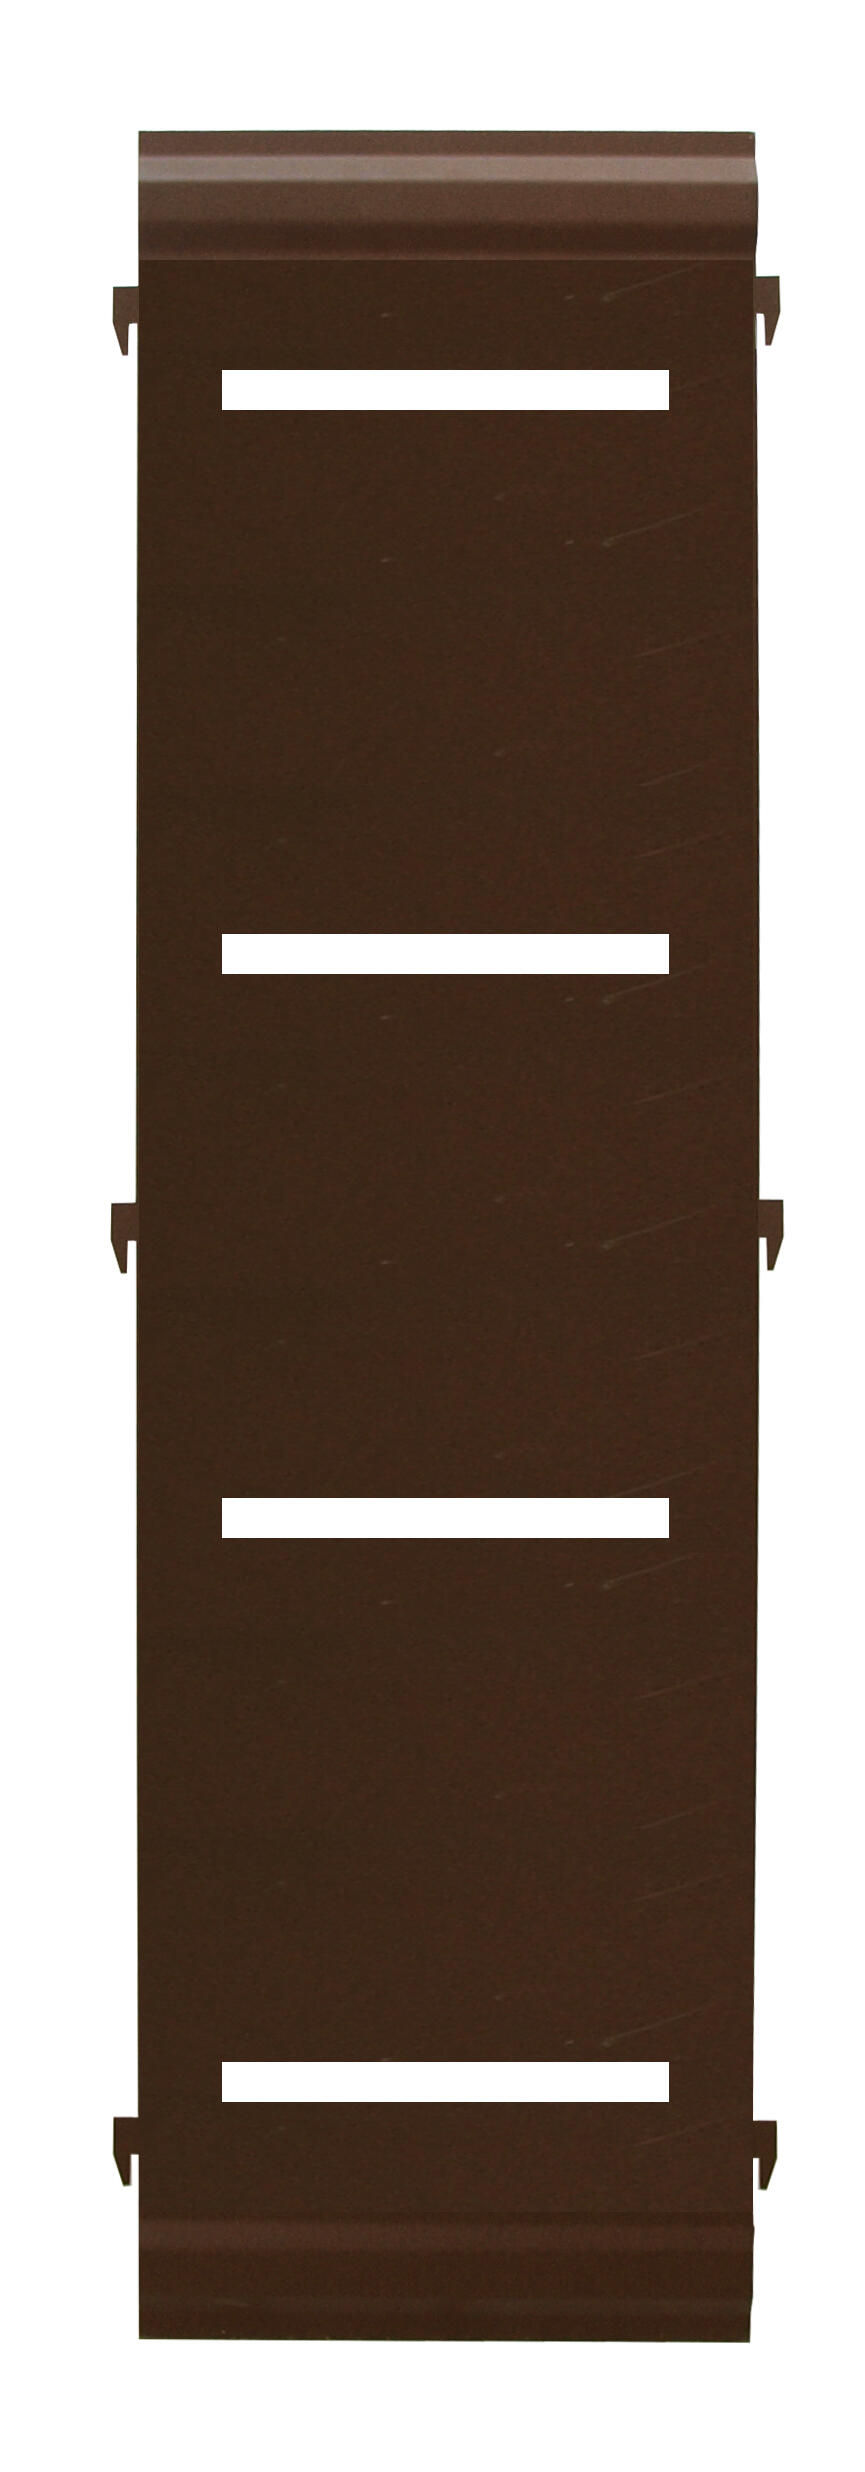 Panel remate valla acero galvanizado franja rayas marrón forja 94x24,5 cm